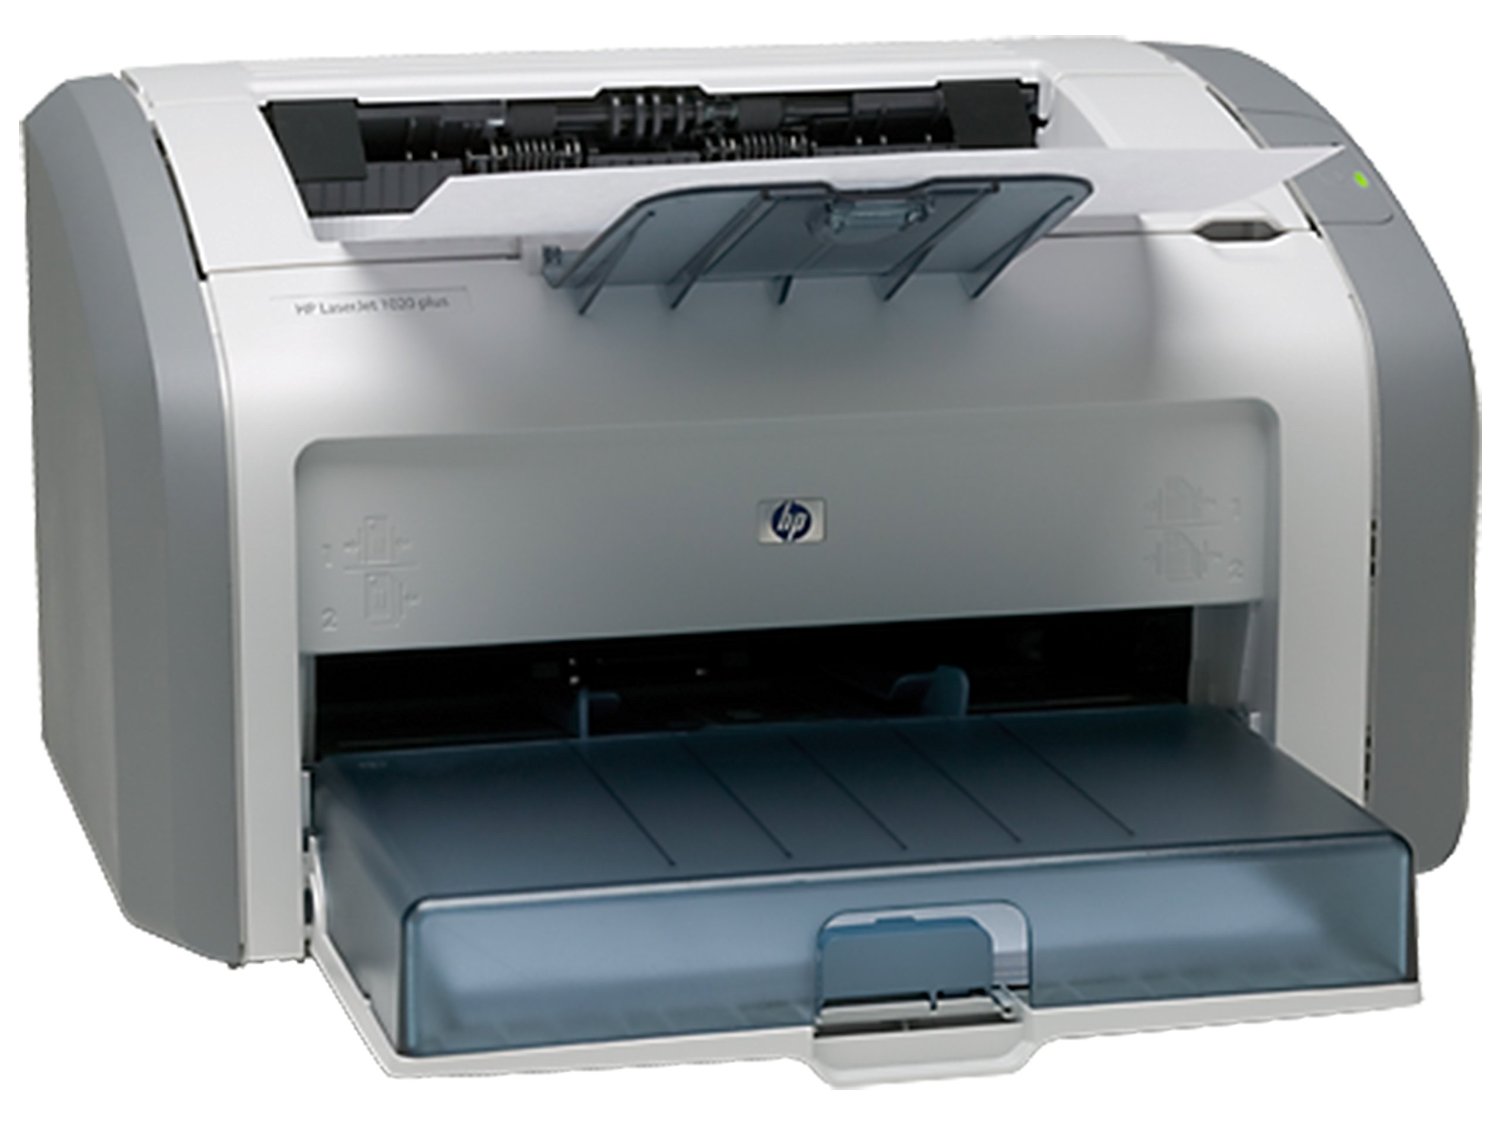 Download HP LaserJet 1020 Printer Drivers For Windows